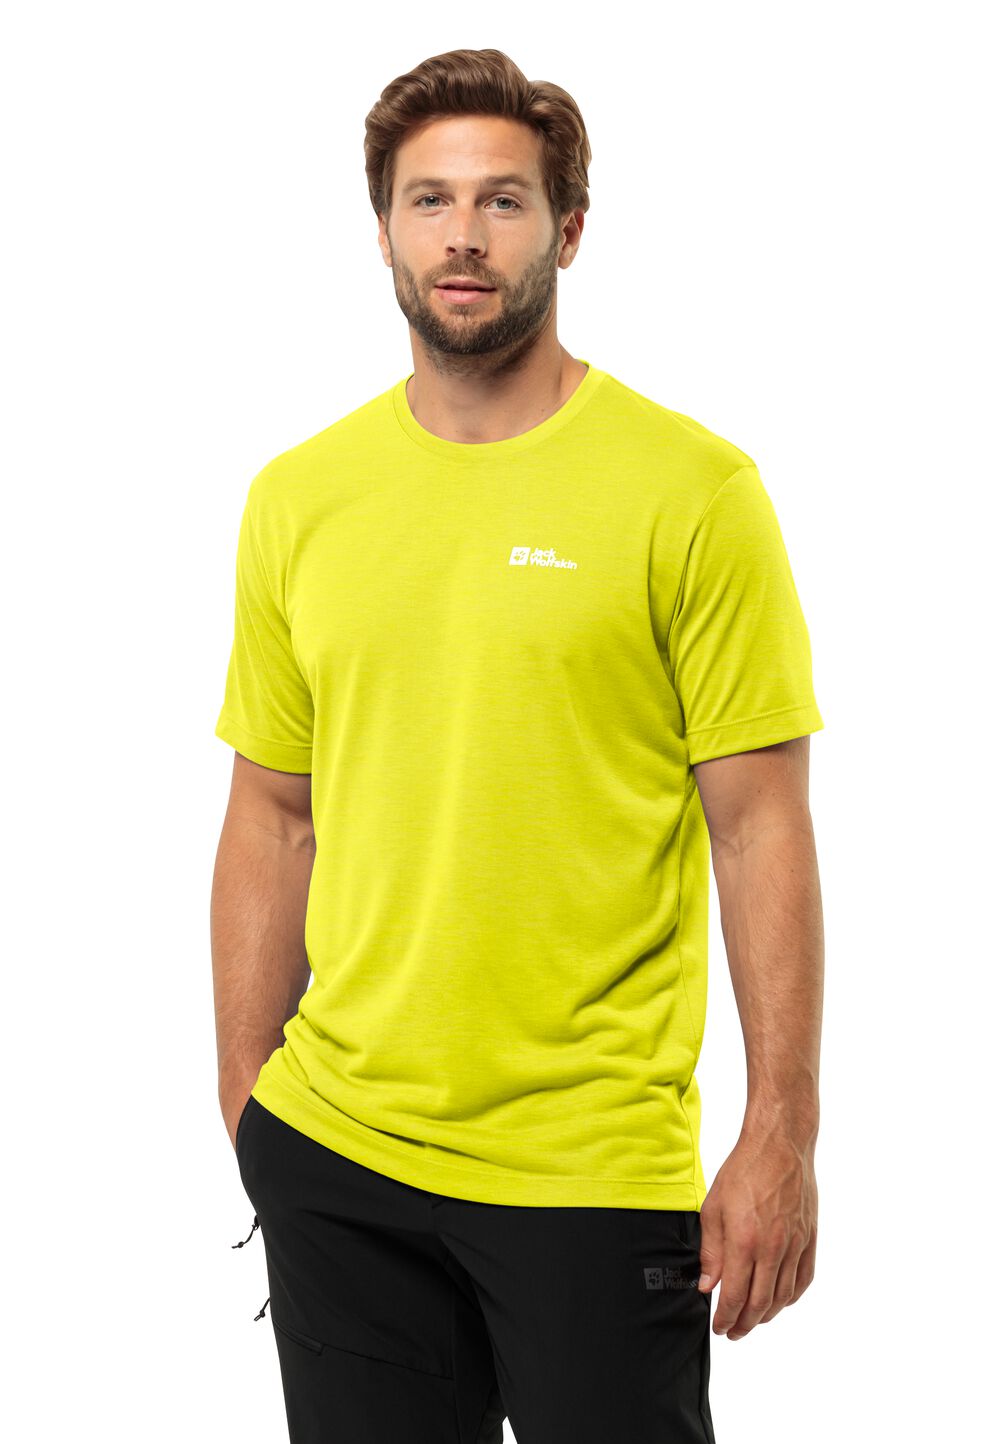 Jack Wolfskin Vonnan S S T-Shirt Men Functioneel shirt Heren S oranje firefly